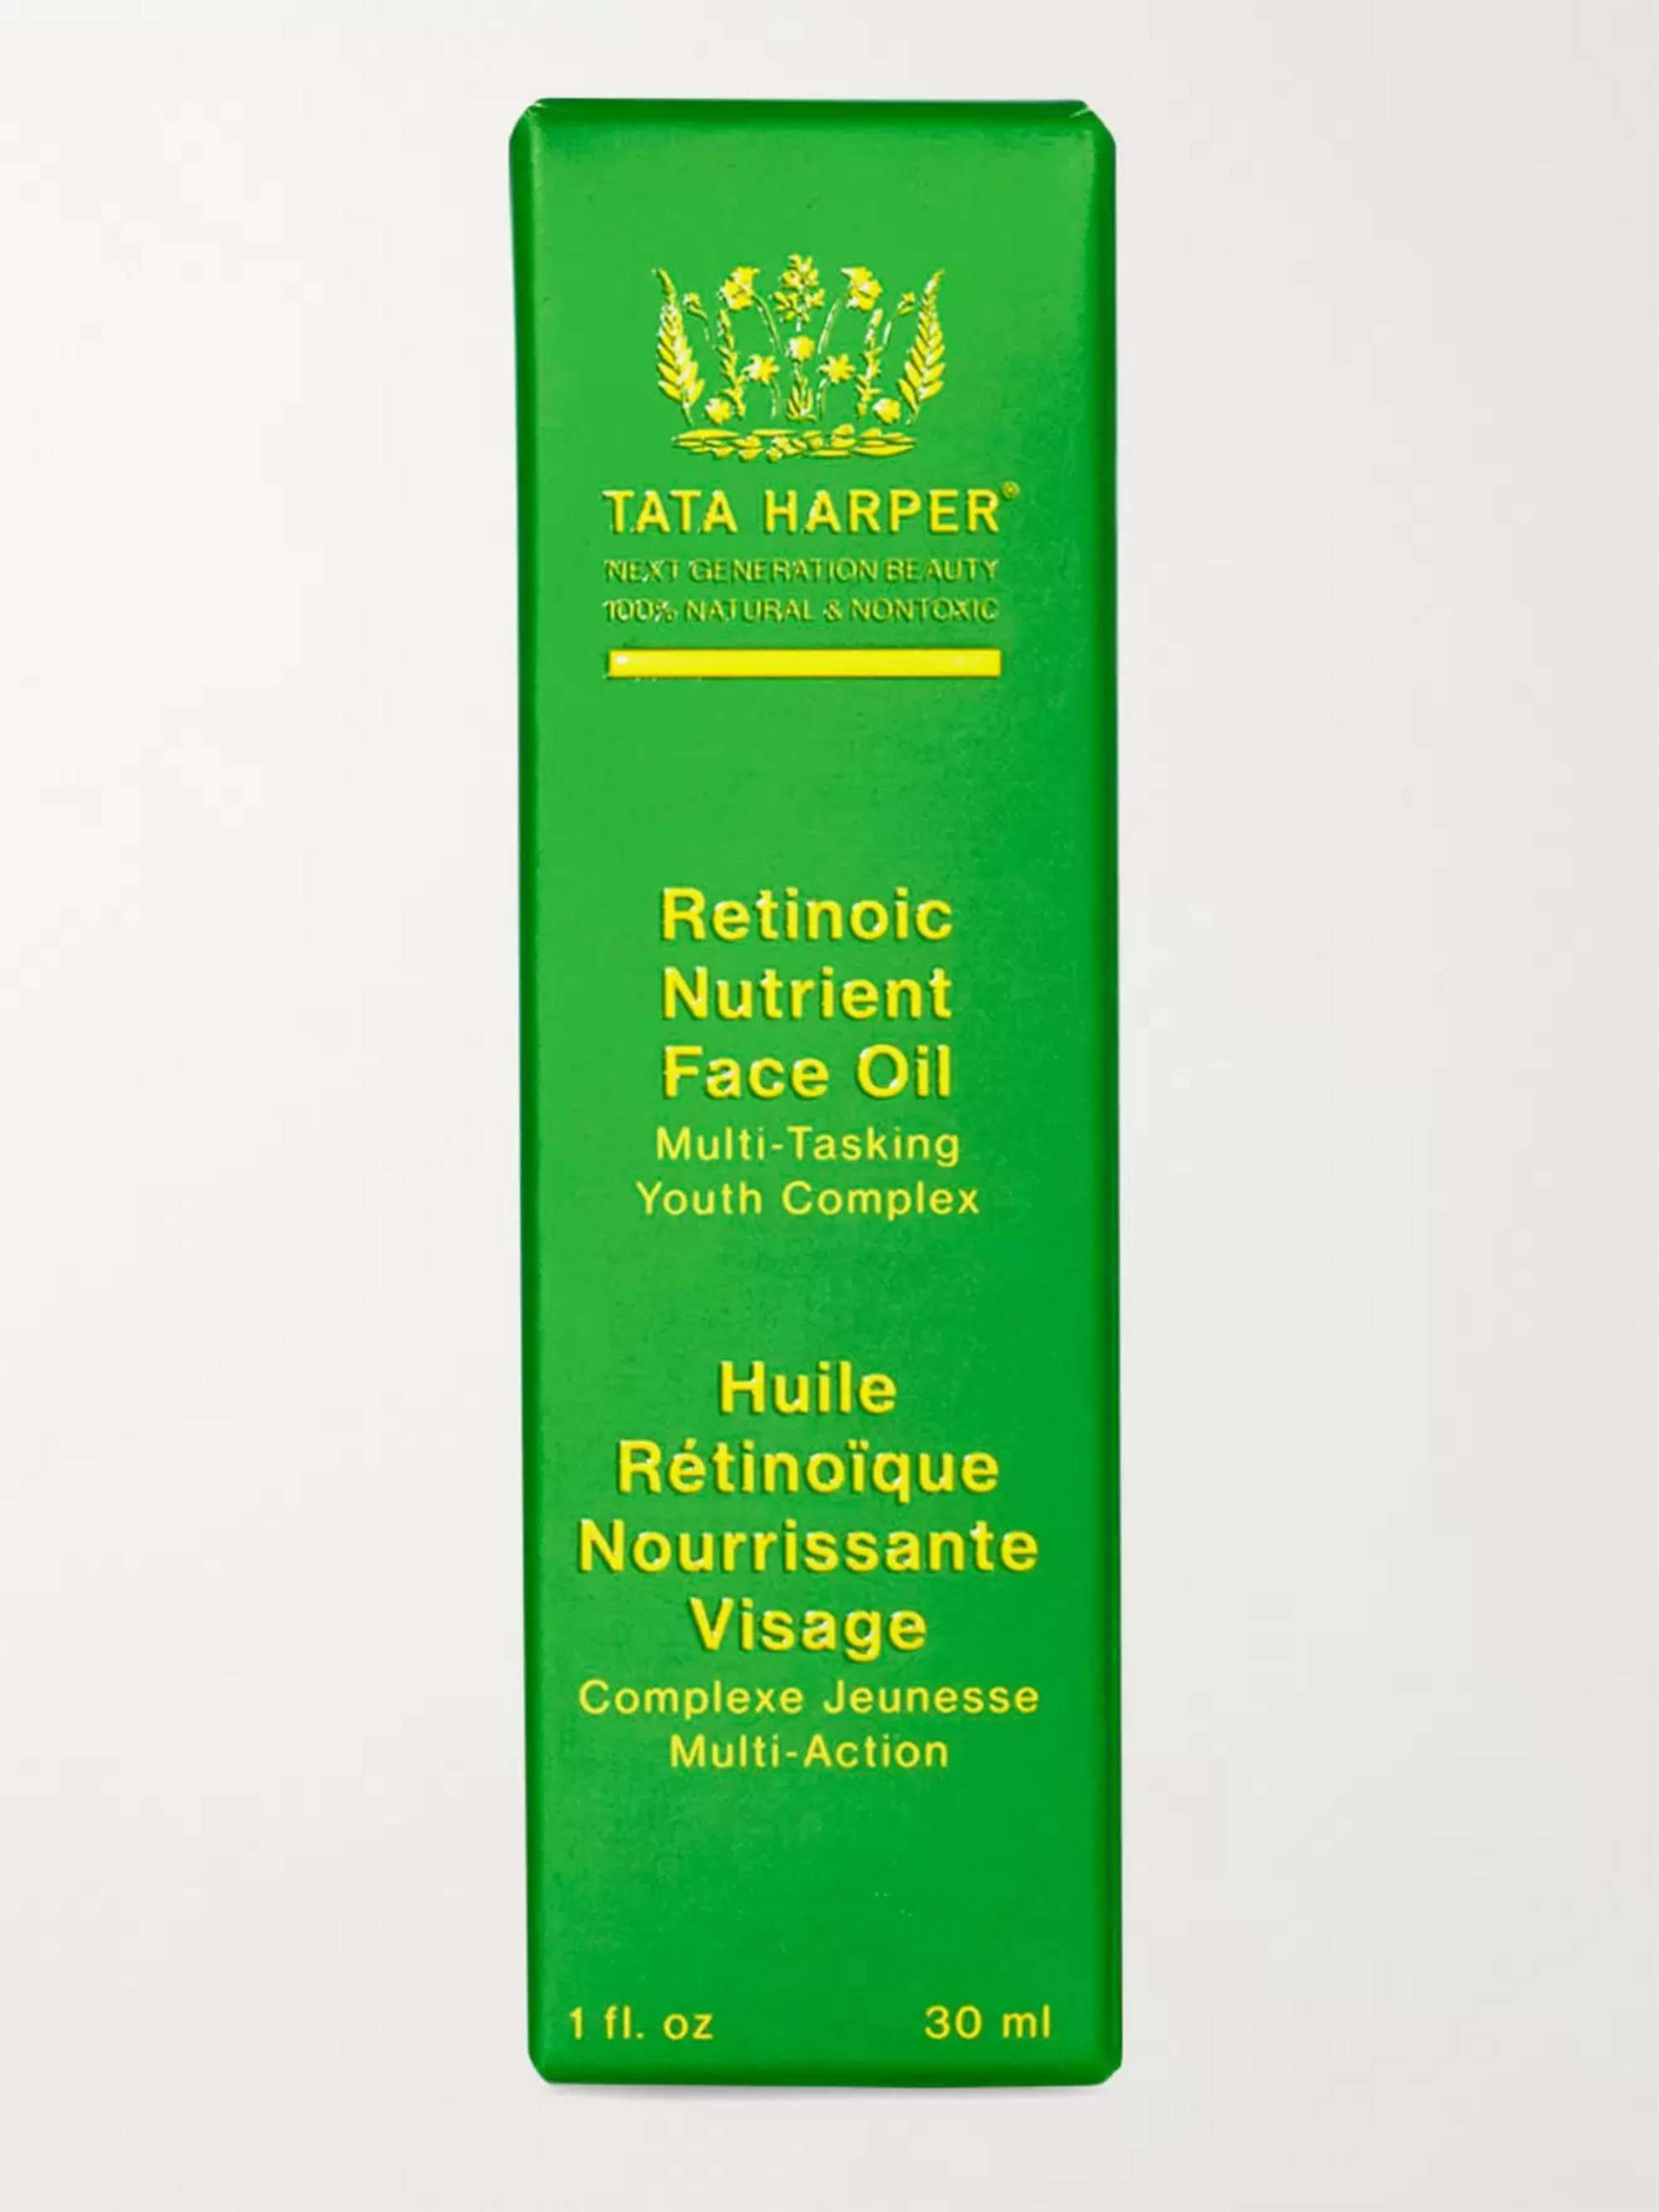 TATA HARPER Retinoic Nutrient Face Oil, 30ml